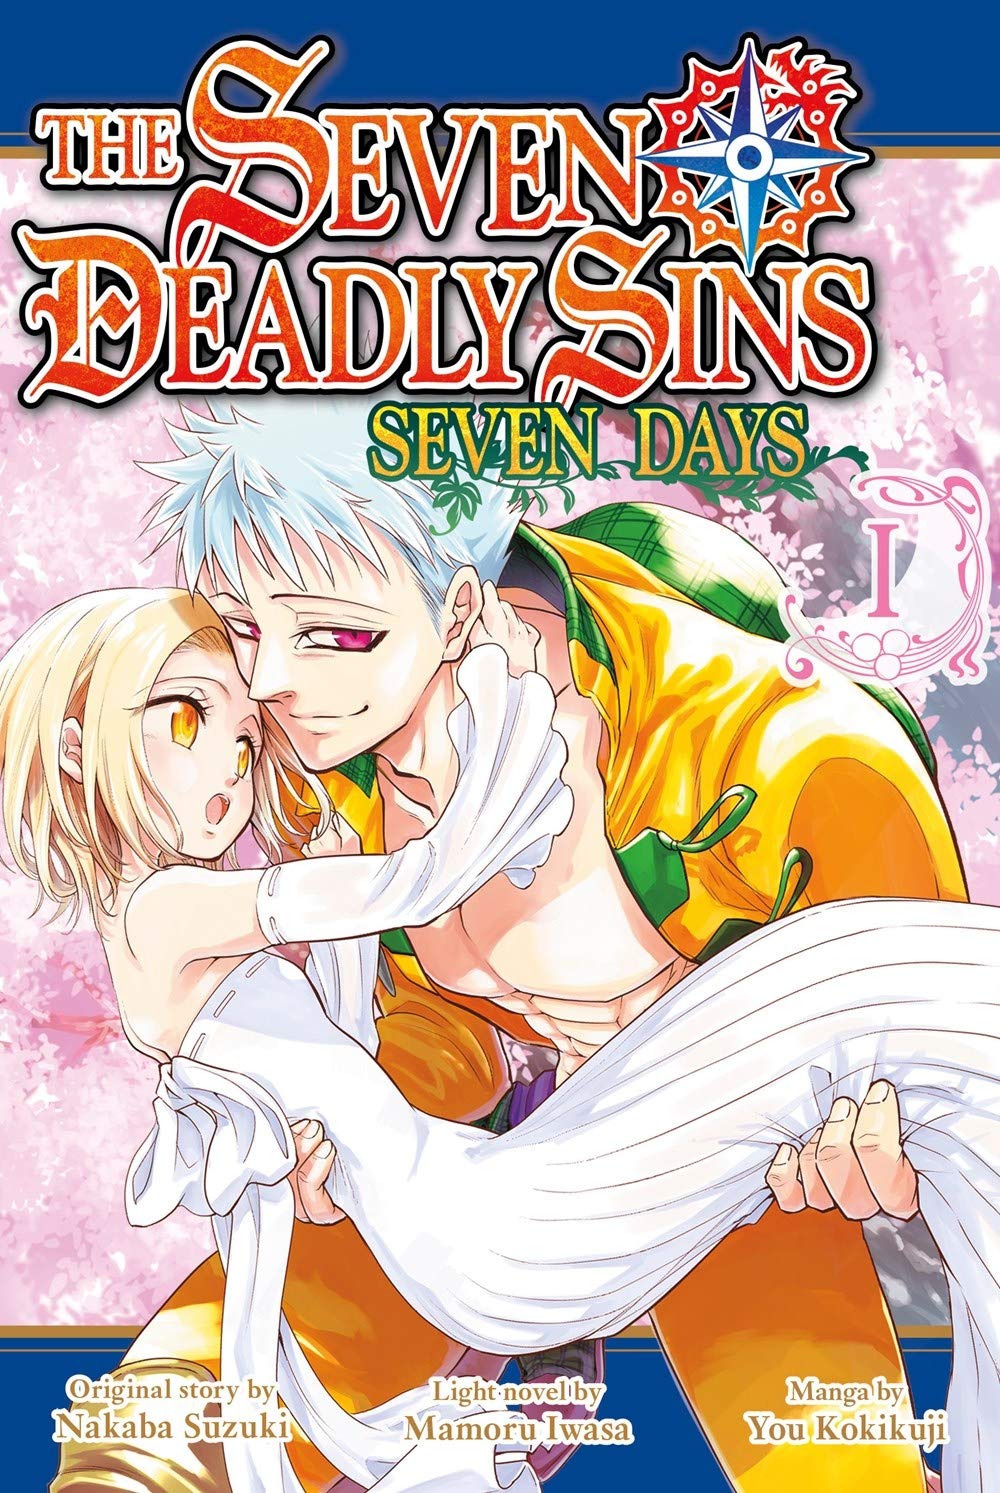 The Seven Deadly Sins: Seven Days - Volume 2